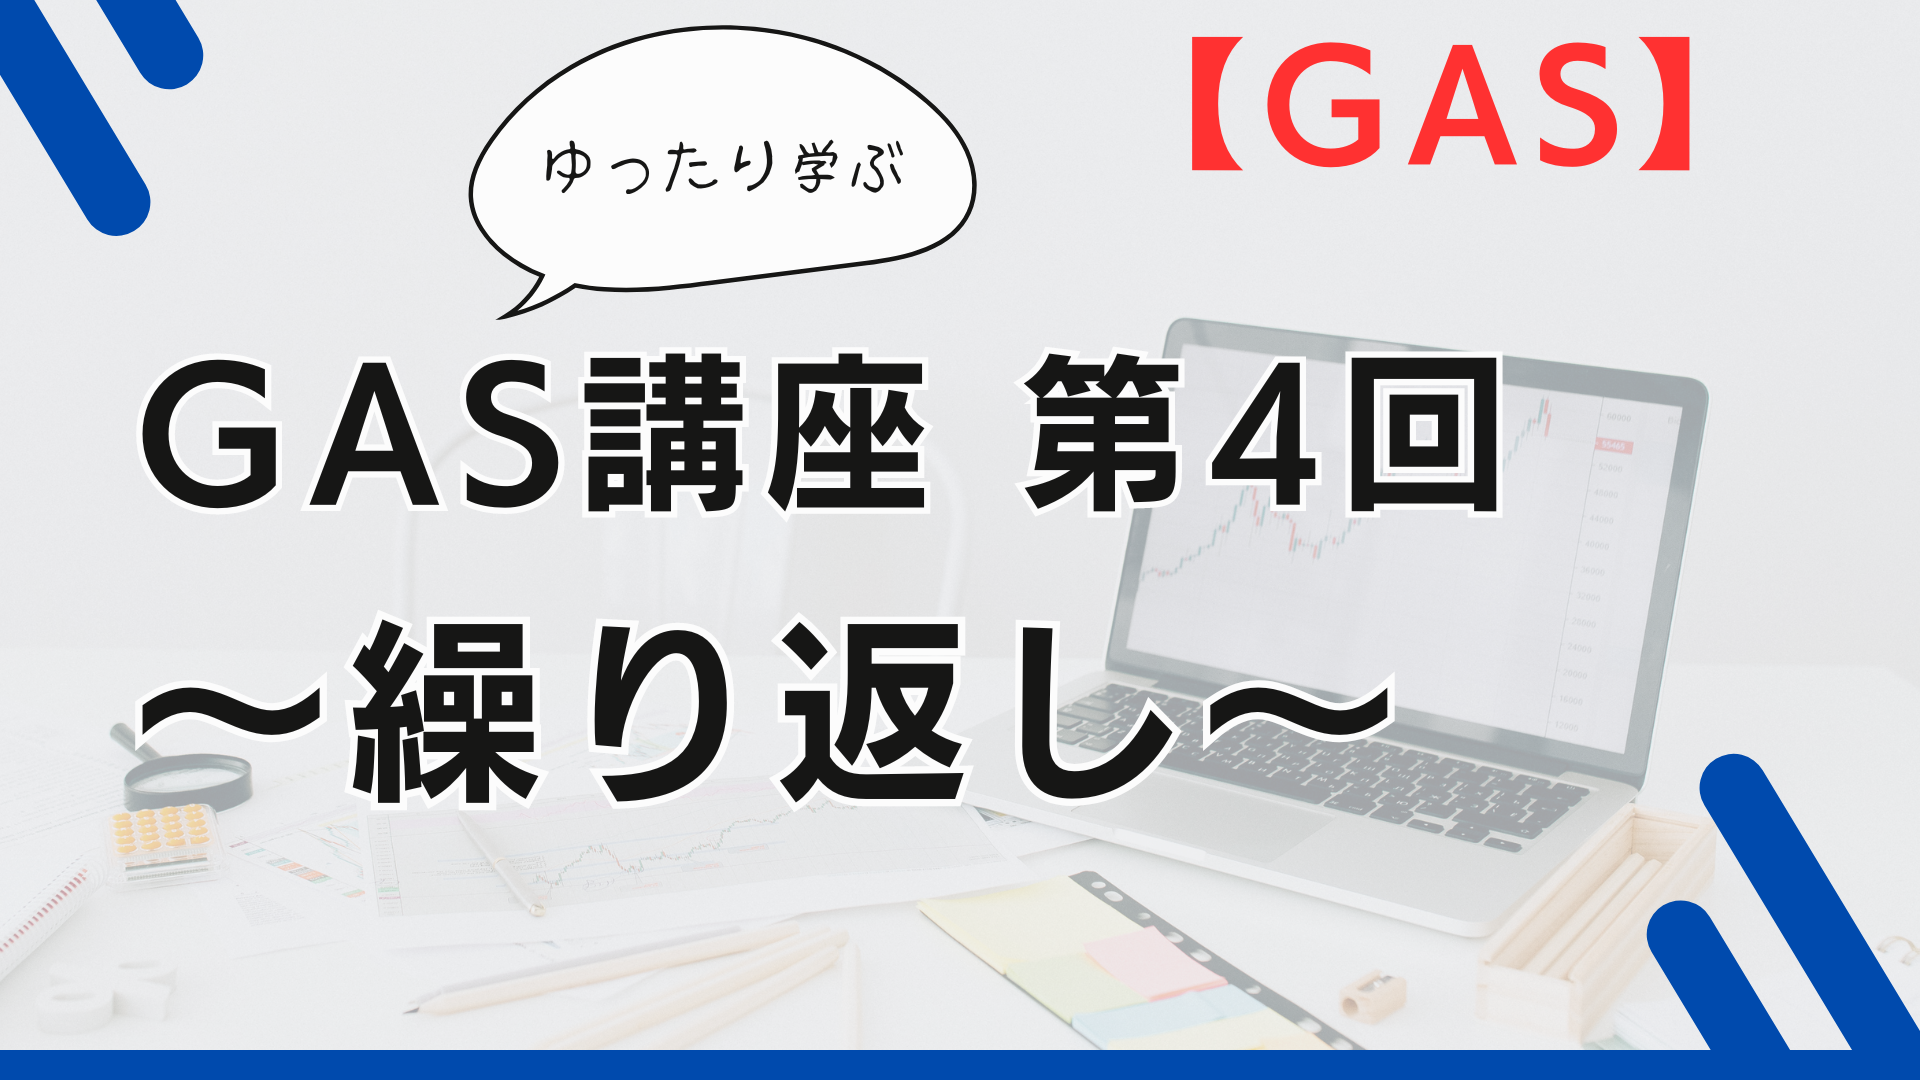 GAS Google Apps Script プログラミング プログラミング初心者 GAS講座